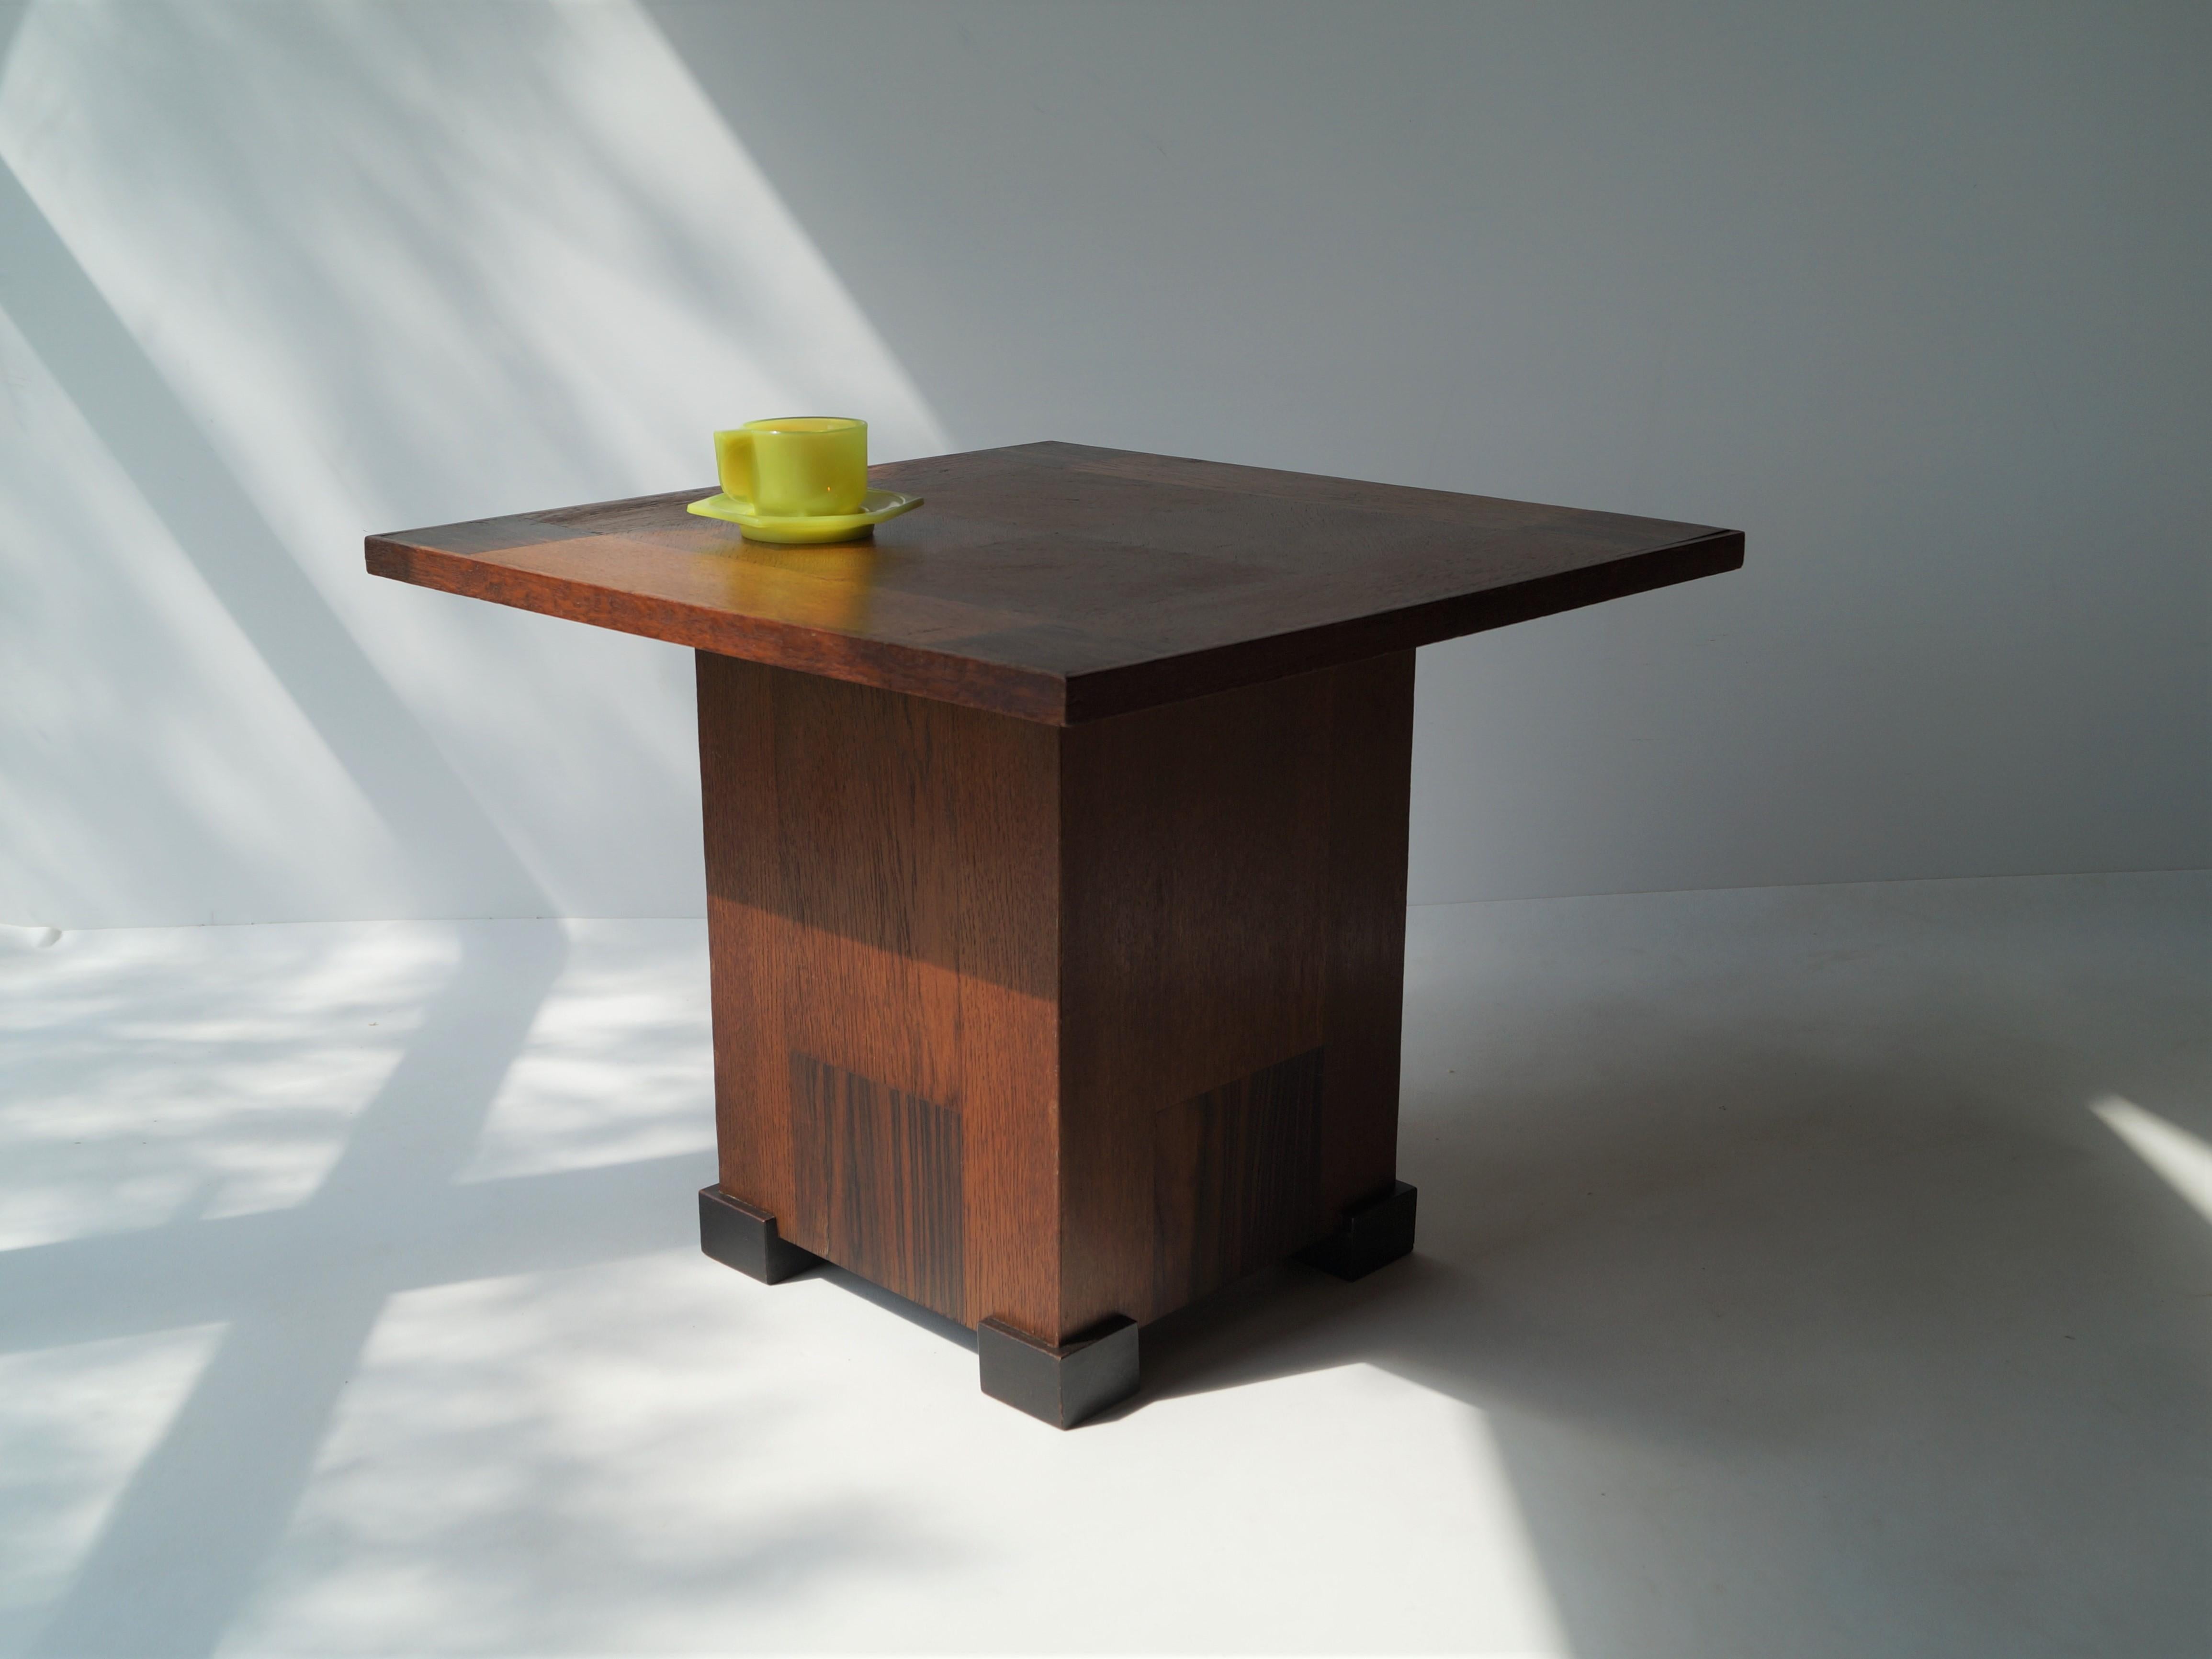 Dutch Art Deco Modernist coffee table in style of P.E.L. Izeren, 1920s For Sale 7